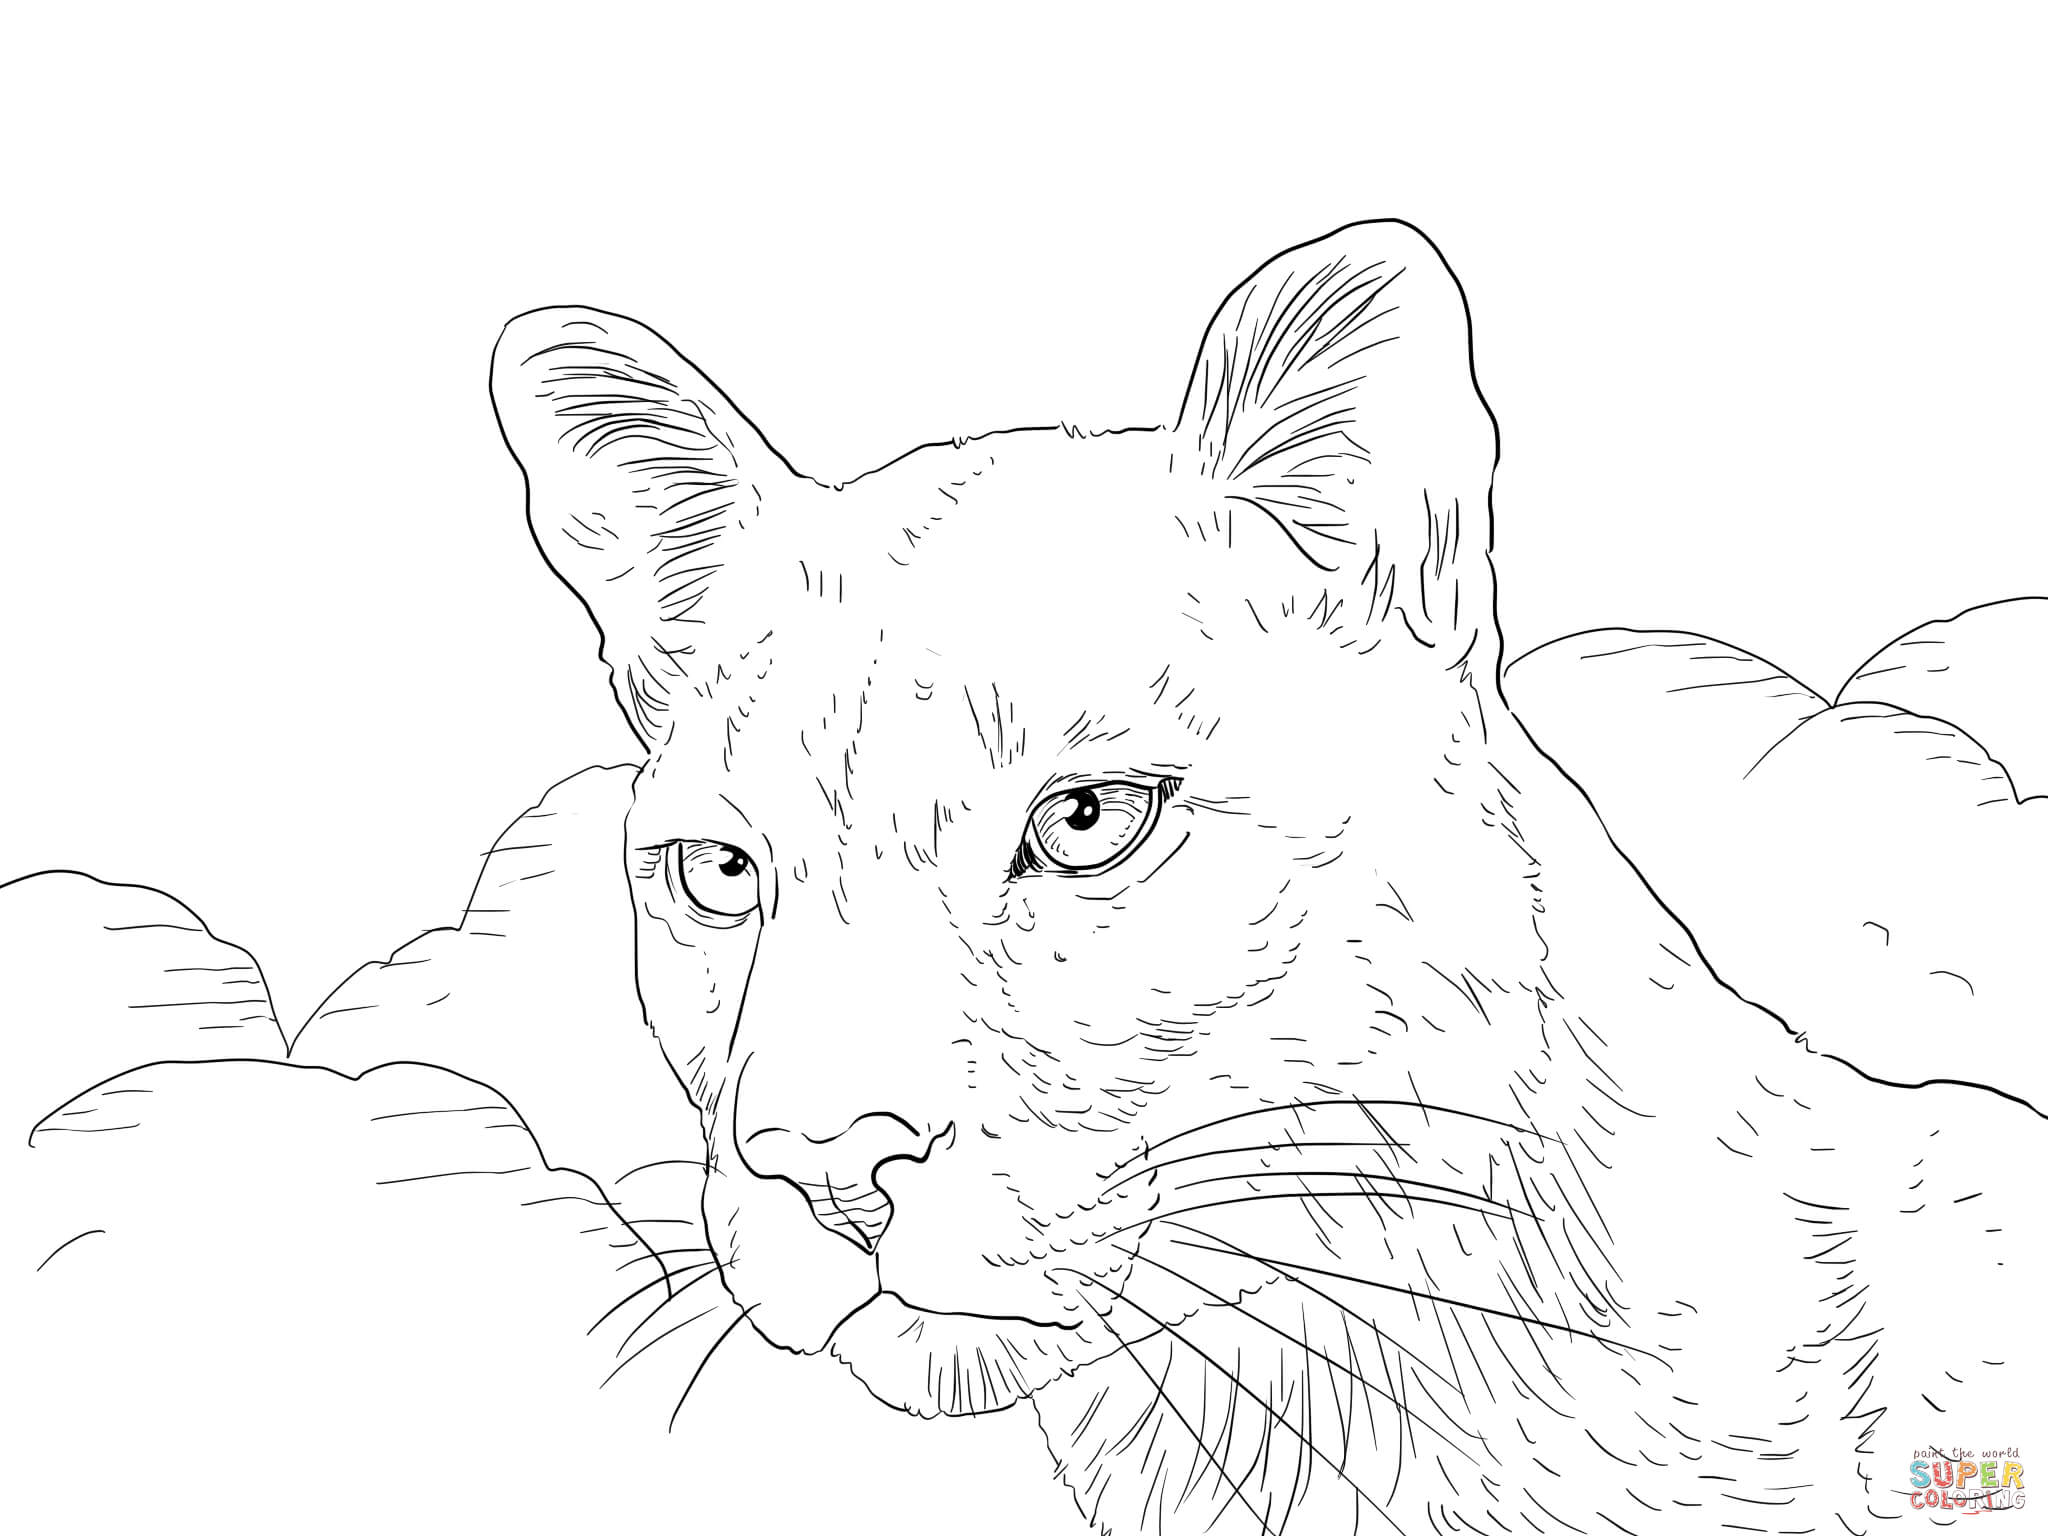 Free Florida Panthers Coloring Page, Download Free Clip Art, Free Clip Art  on Clipart Library